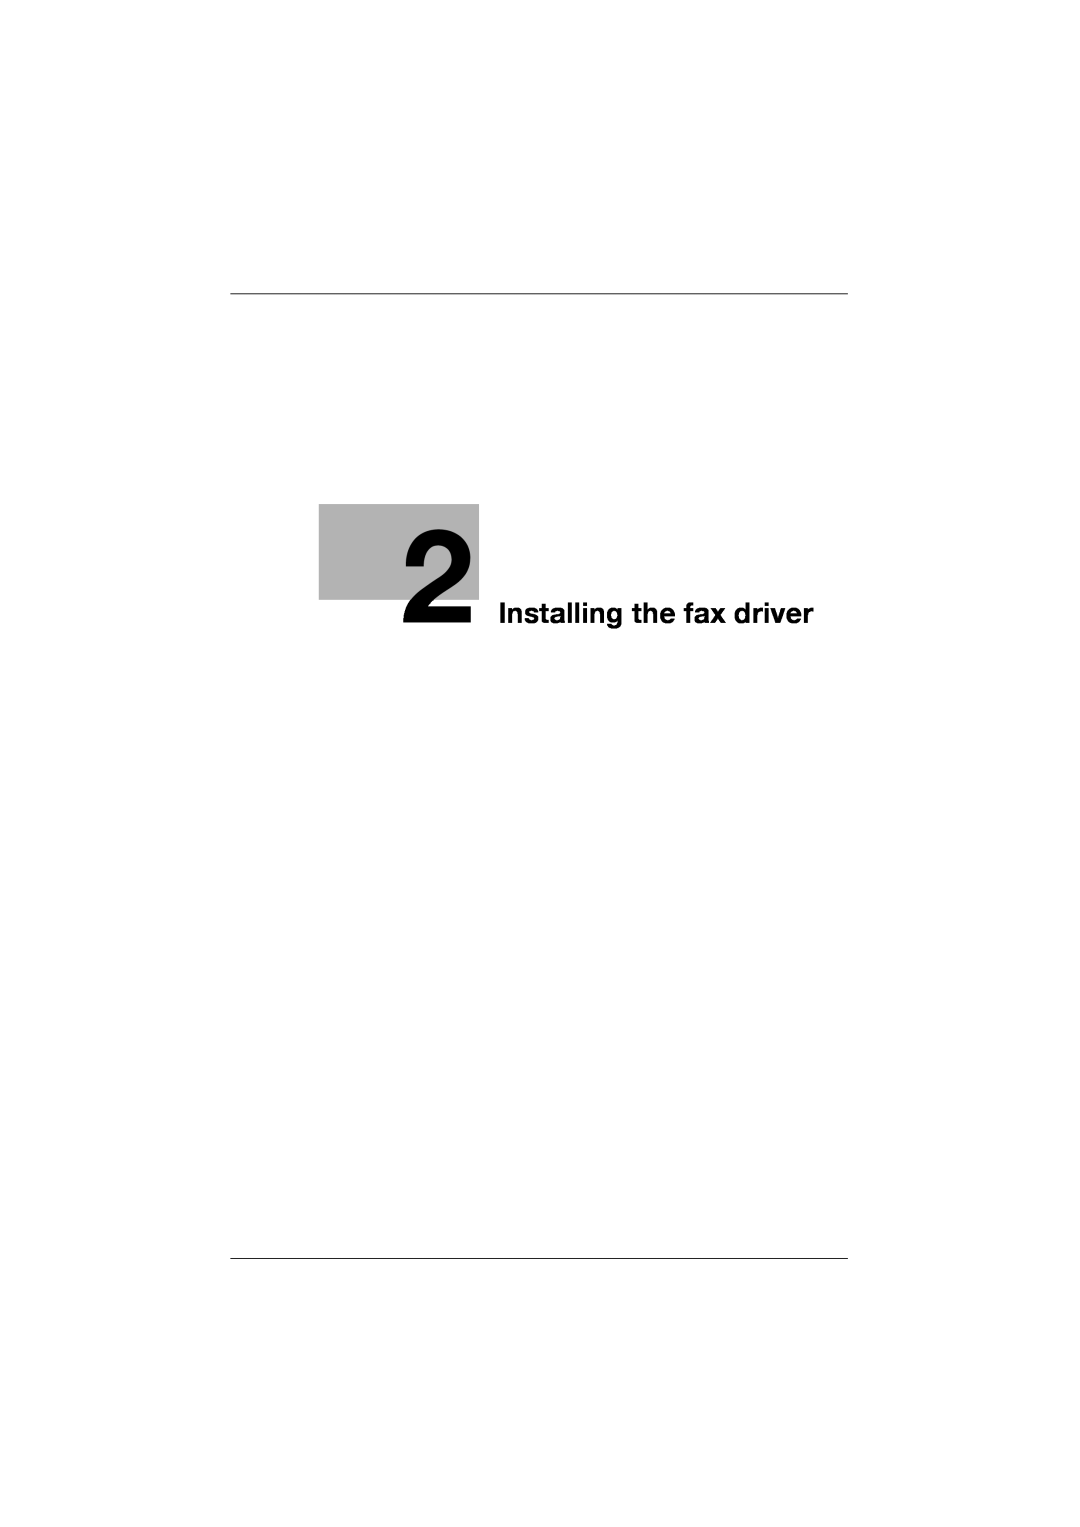 Konica Minolta 282, 222, 362 manual Installing the fax driver 